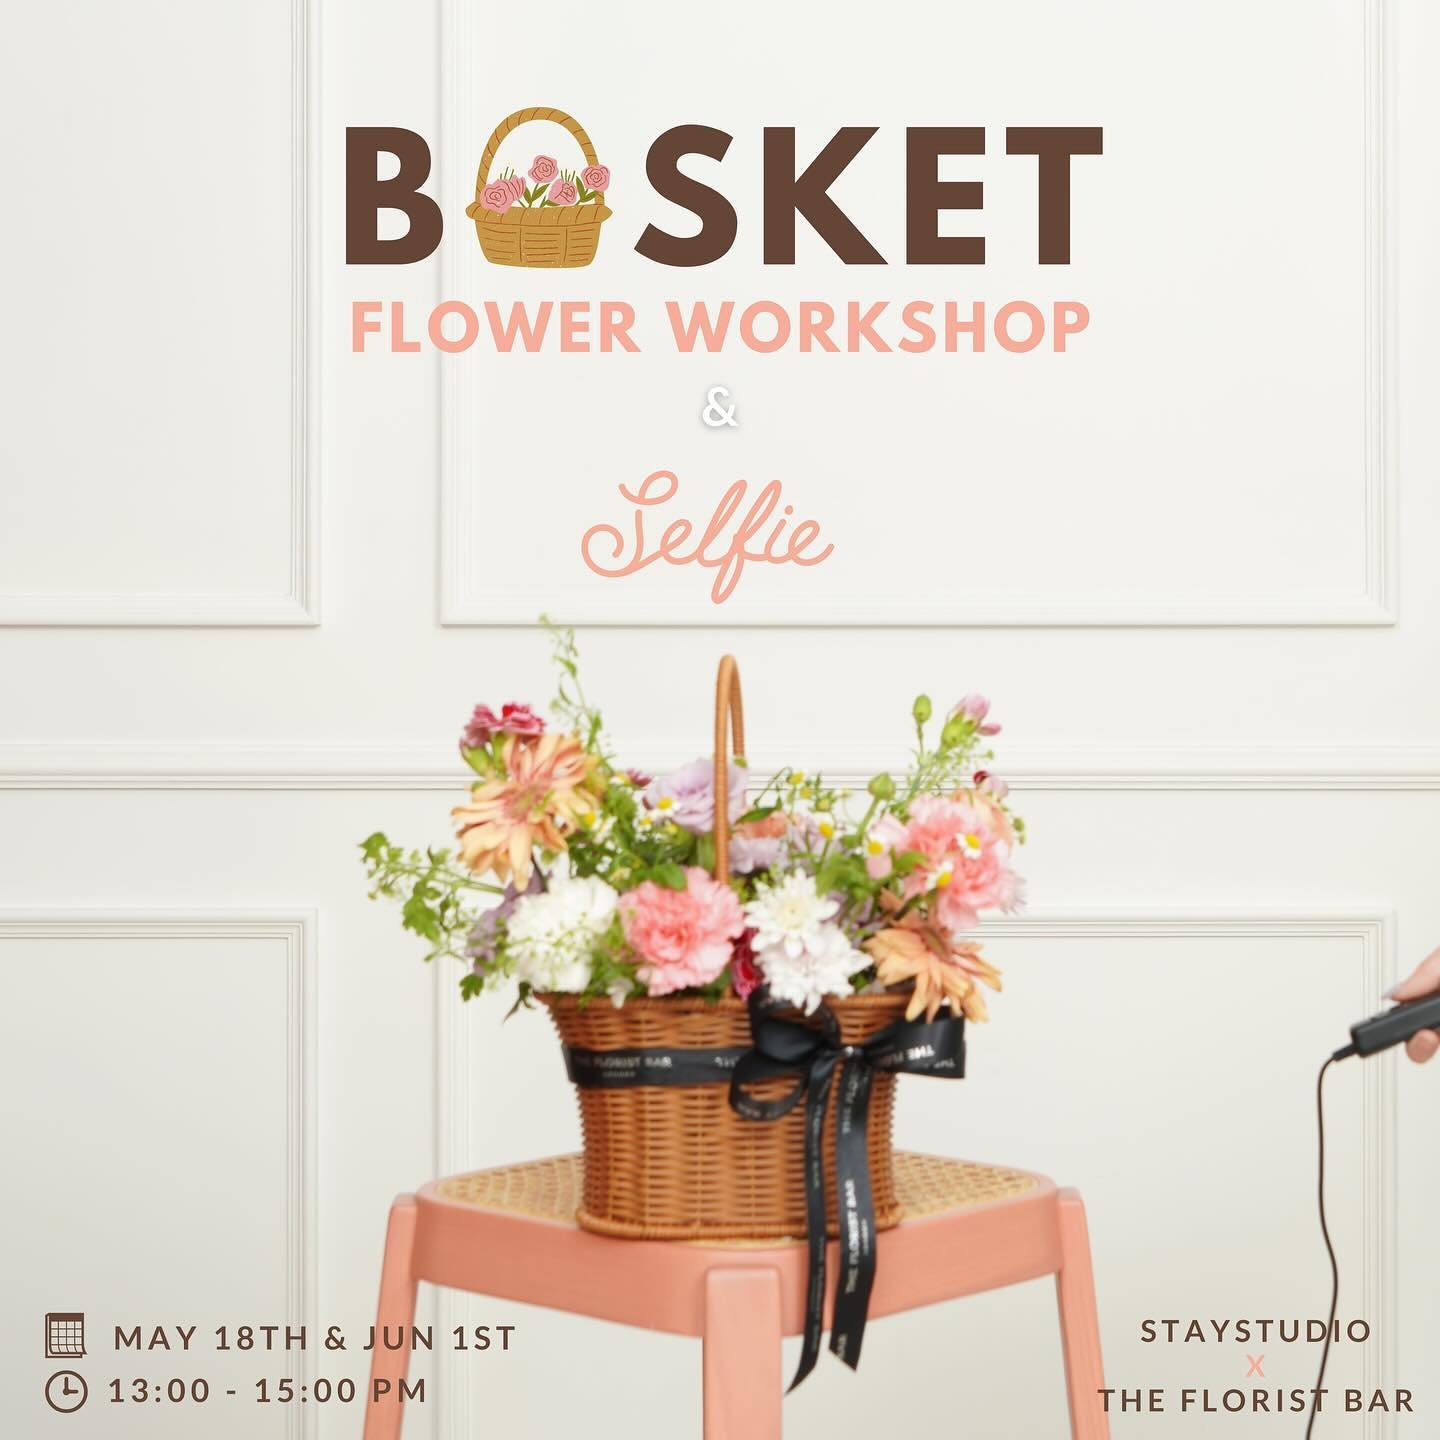 Basket Flower Workshop &amp; Selfie 
Stay Studio X The Florist Bar 💐✨

เวิร์คช็อปจัดตะกร้าดอกไม้ 🧺 พร้อมแช๊ะรูปเซลฟี่กลับมาอีกครั้ง รอบนี้จัดที่ทองหล่อ ฉากครีม *คนละสาขากับครั้งก่อน*

🗓️: May 18th &amp; Jun 1st
⏰: 13:00 - 15:30 PM (including Selfi